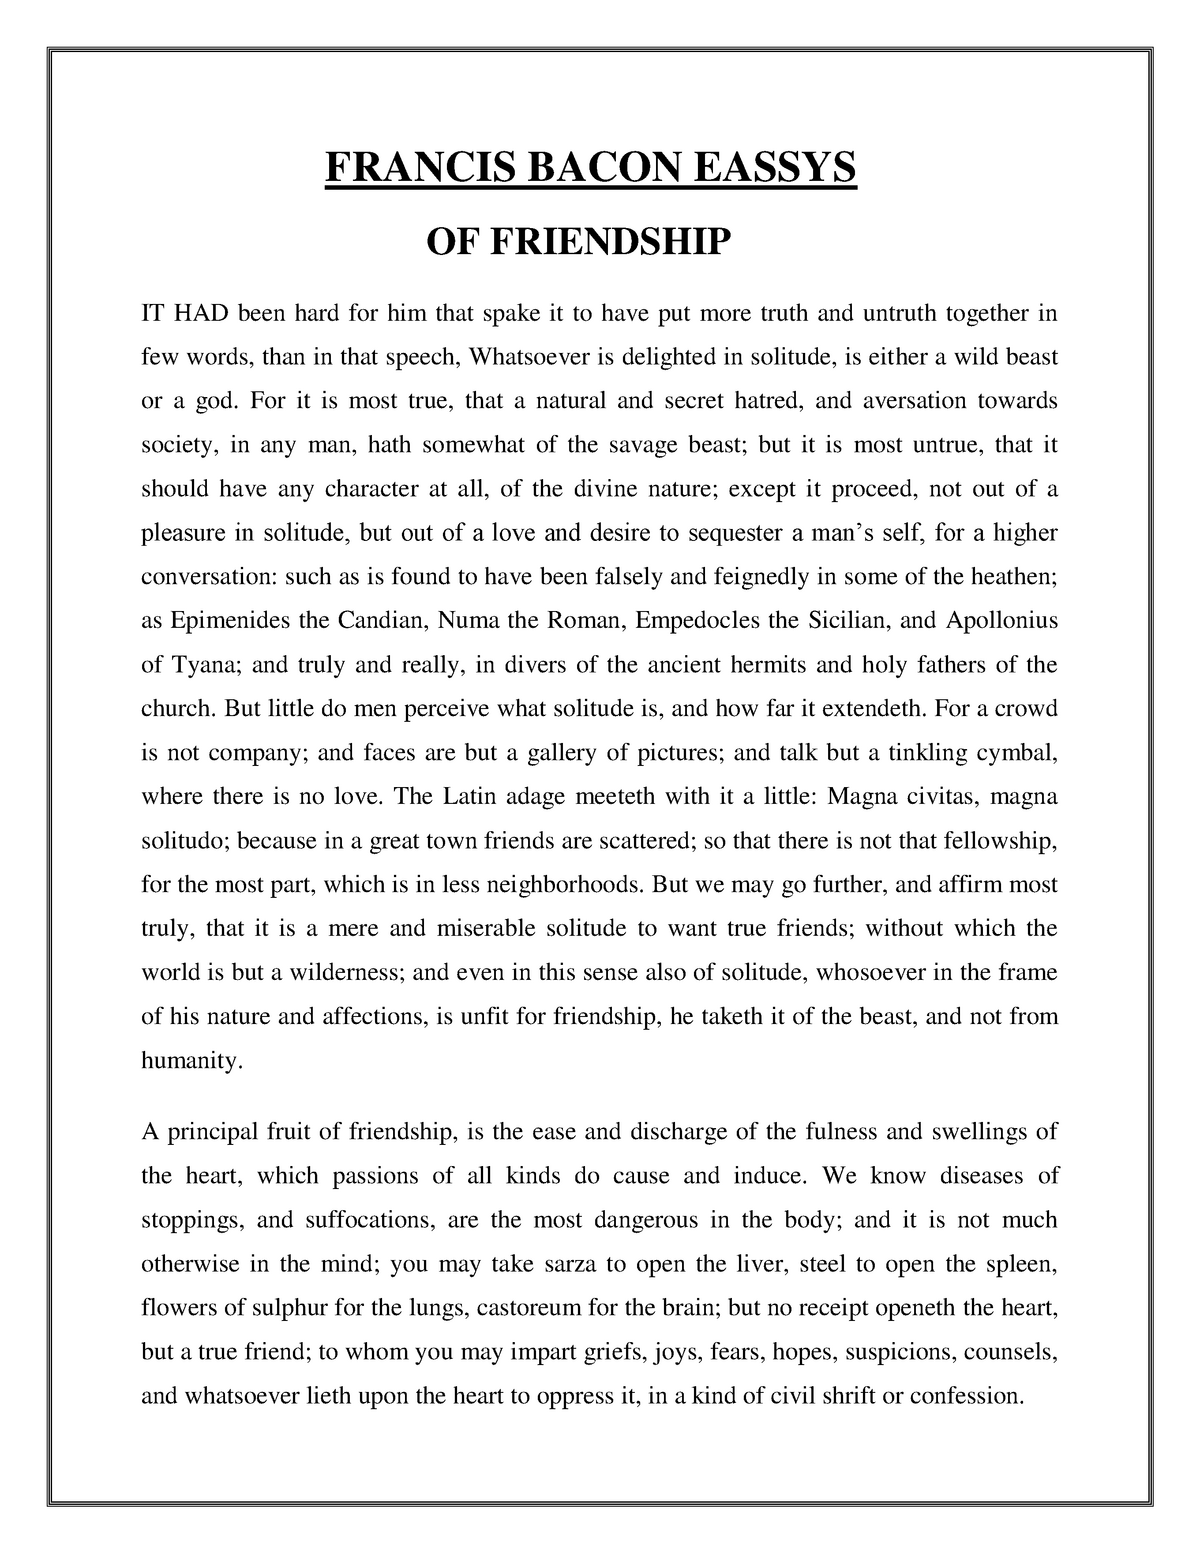 bacon essay on friendship